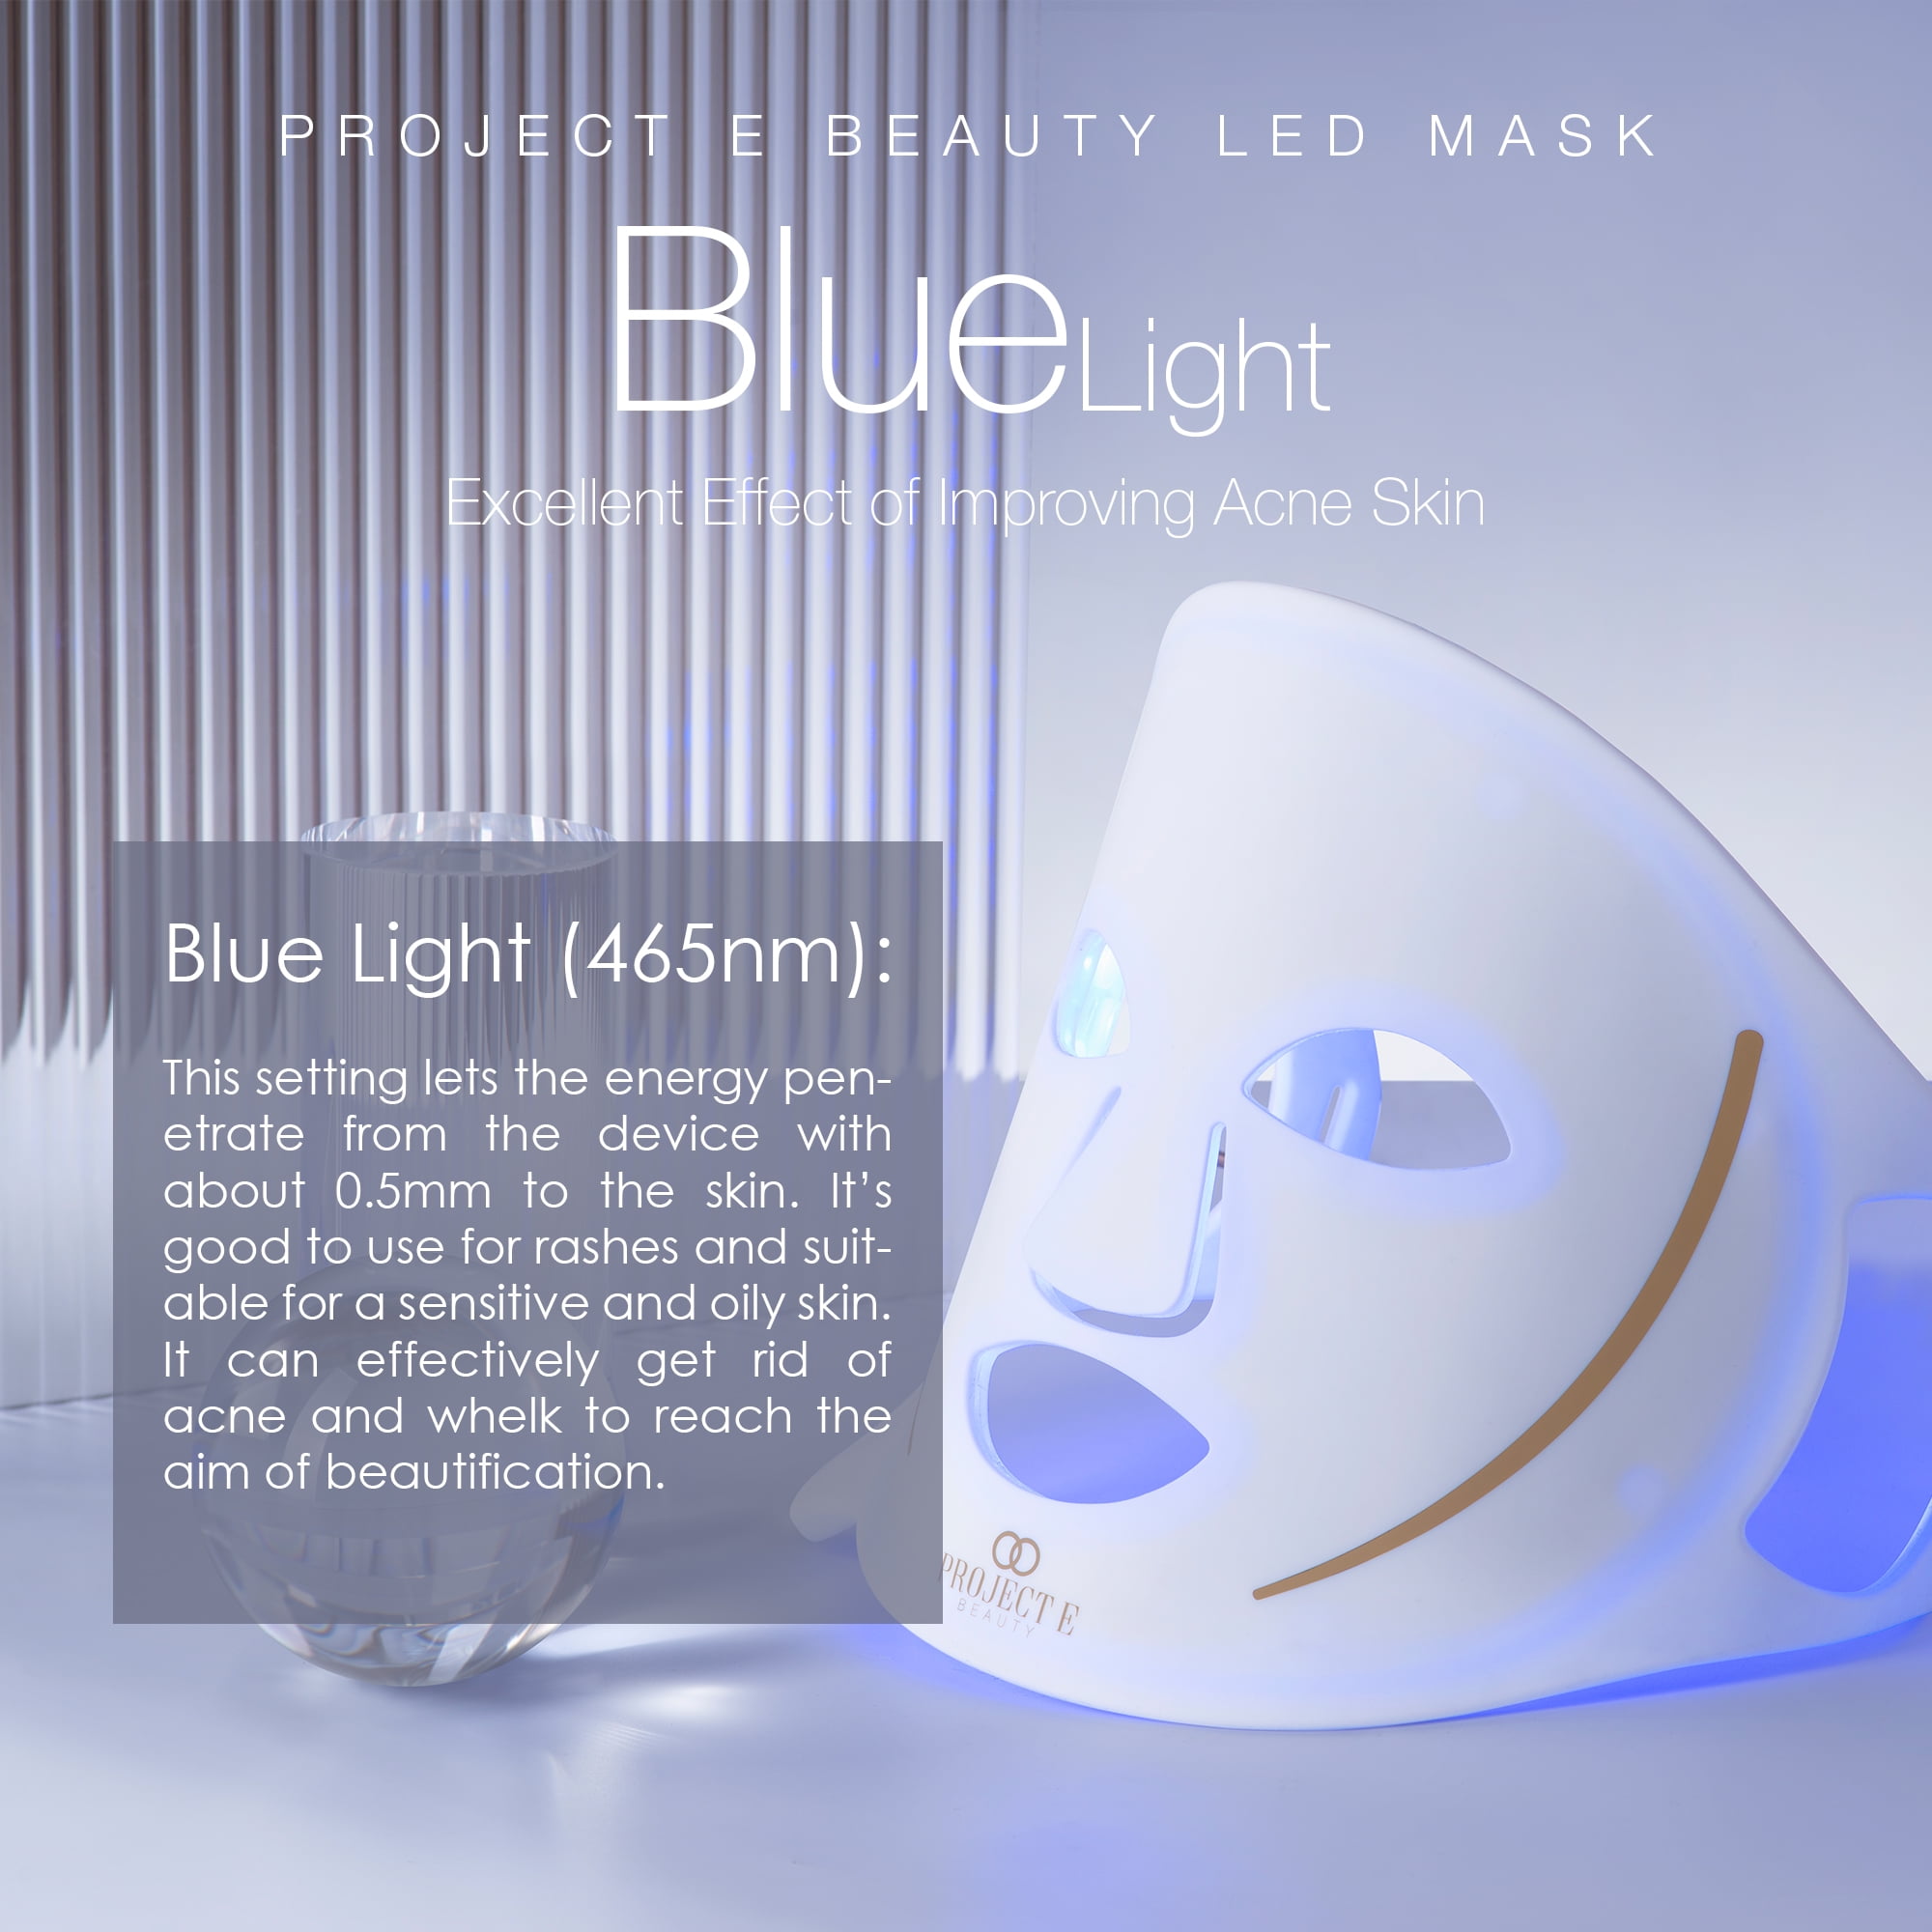 Project E Beauty LightAura Flex LED Face Mask, Silicone, Anti-Aging  Therapy, Anti-Acne, Treat Pimple 